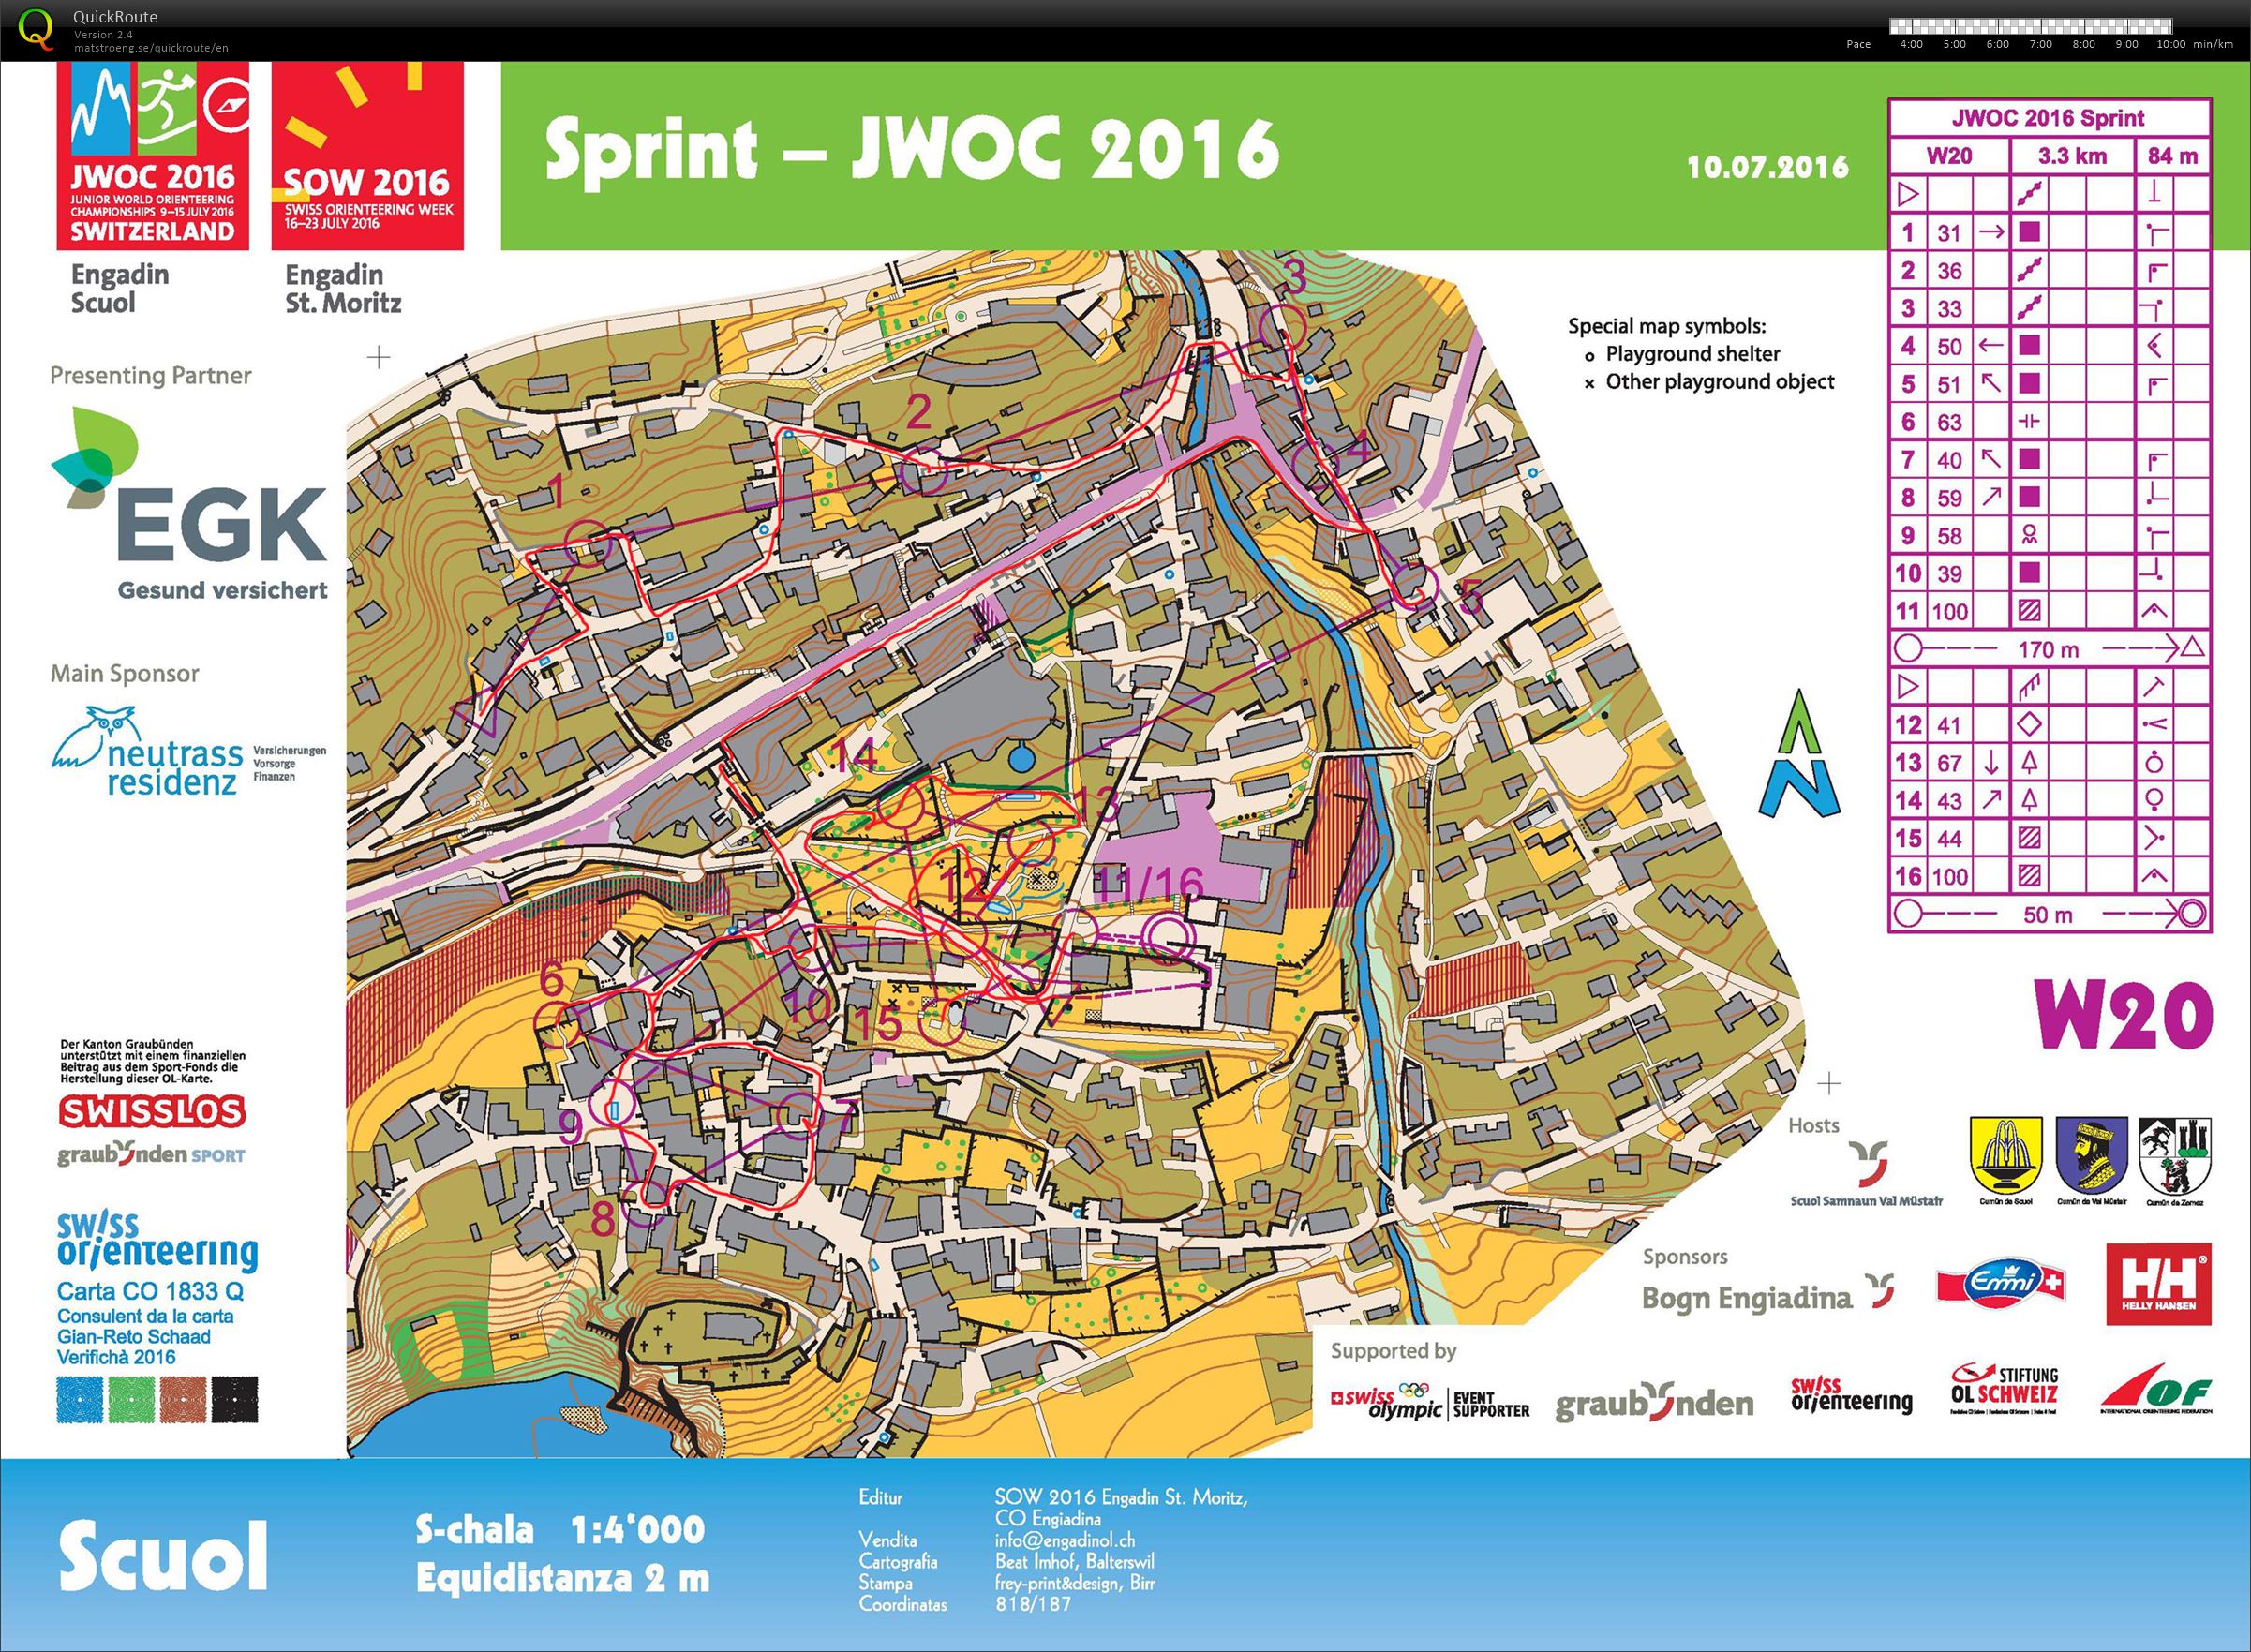 JWOC 2016 Sprint (10.07.2016)